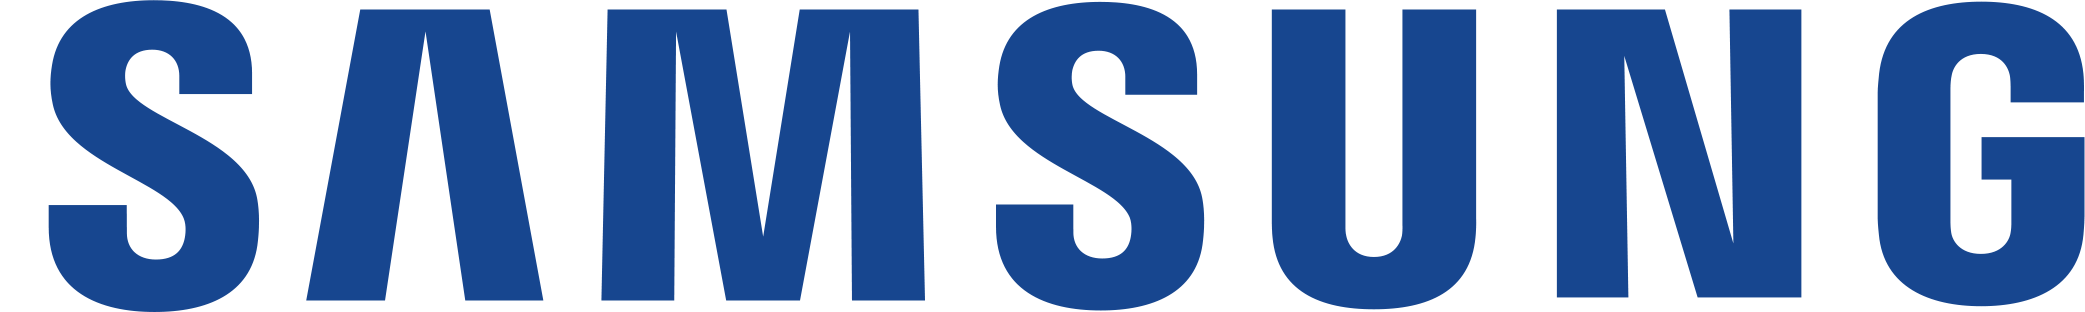 Samsung Logo Download PNG Image